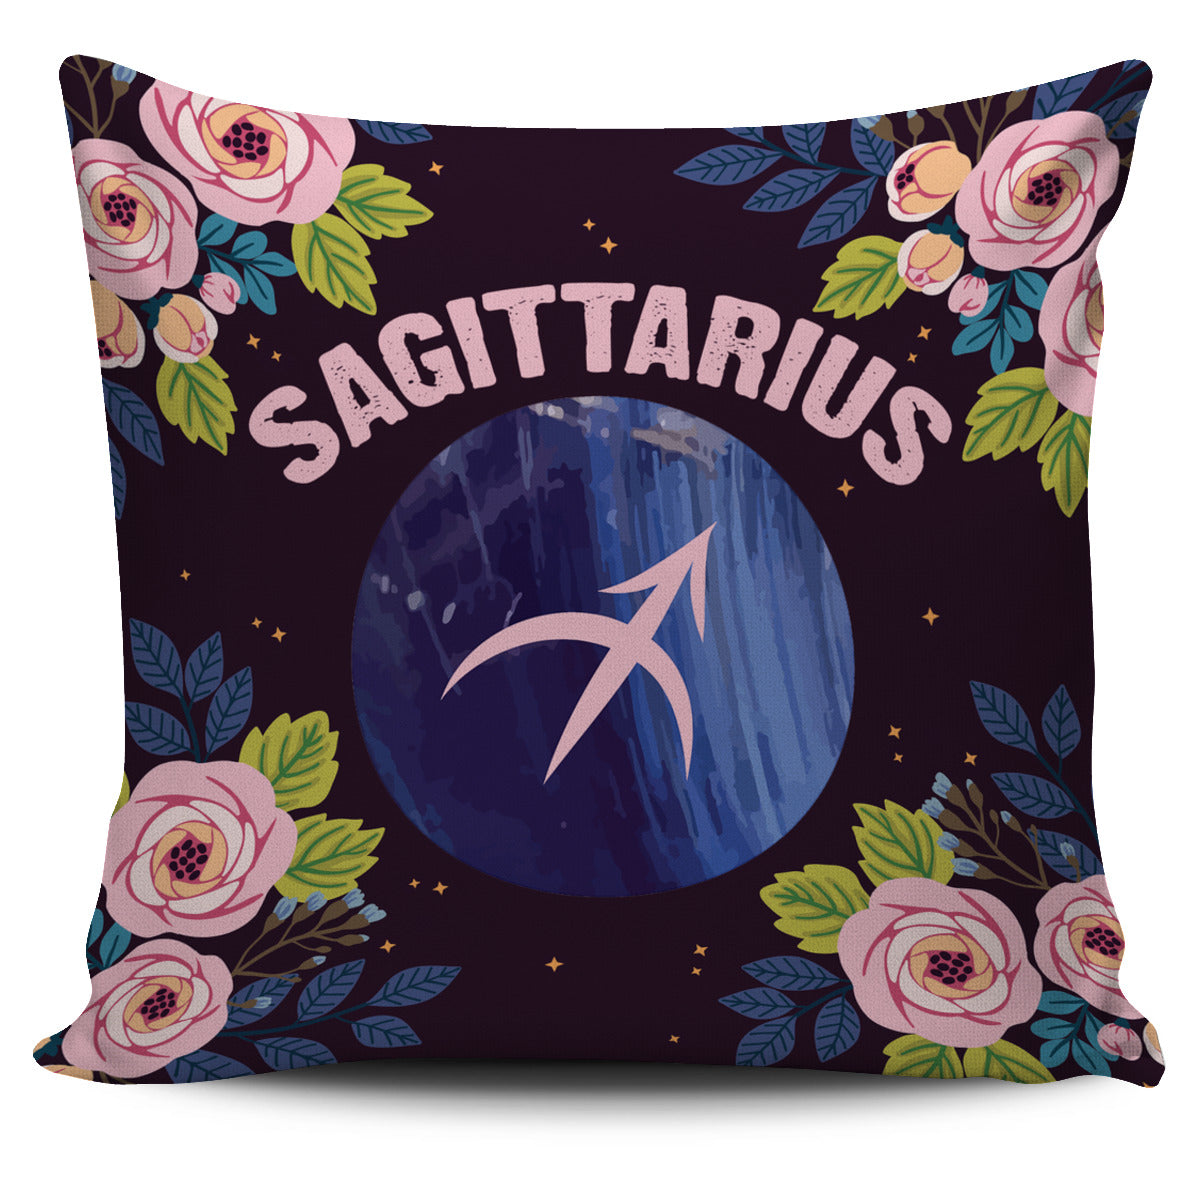 Sagittarius Vibes Pillow Cover